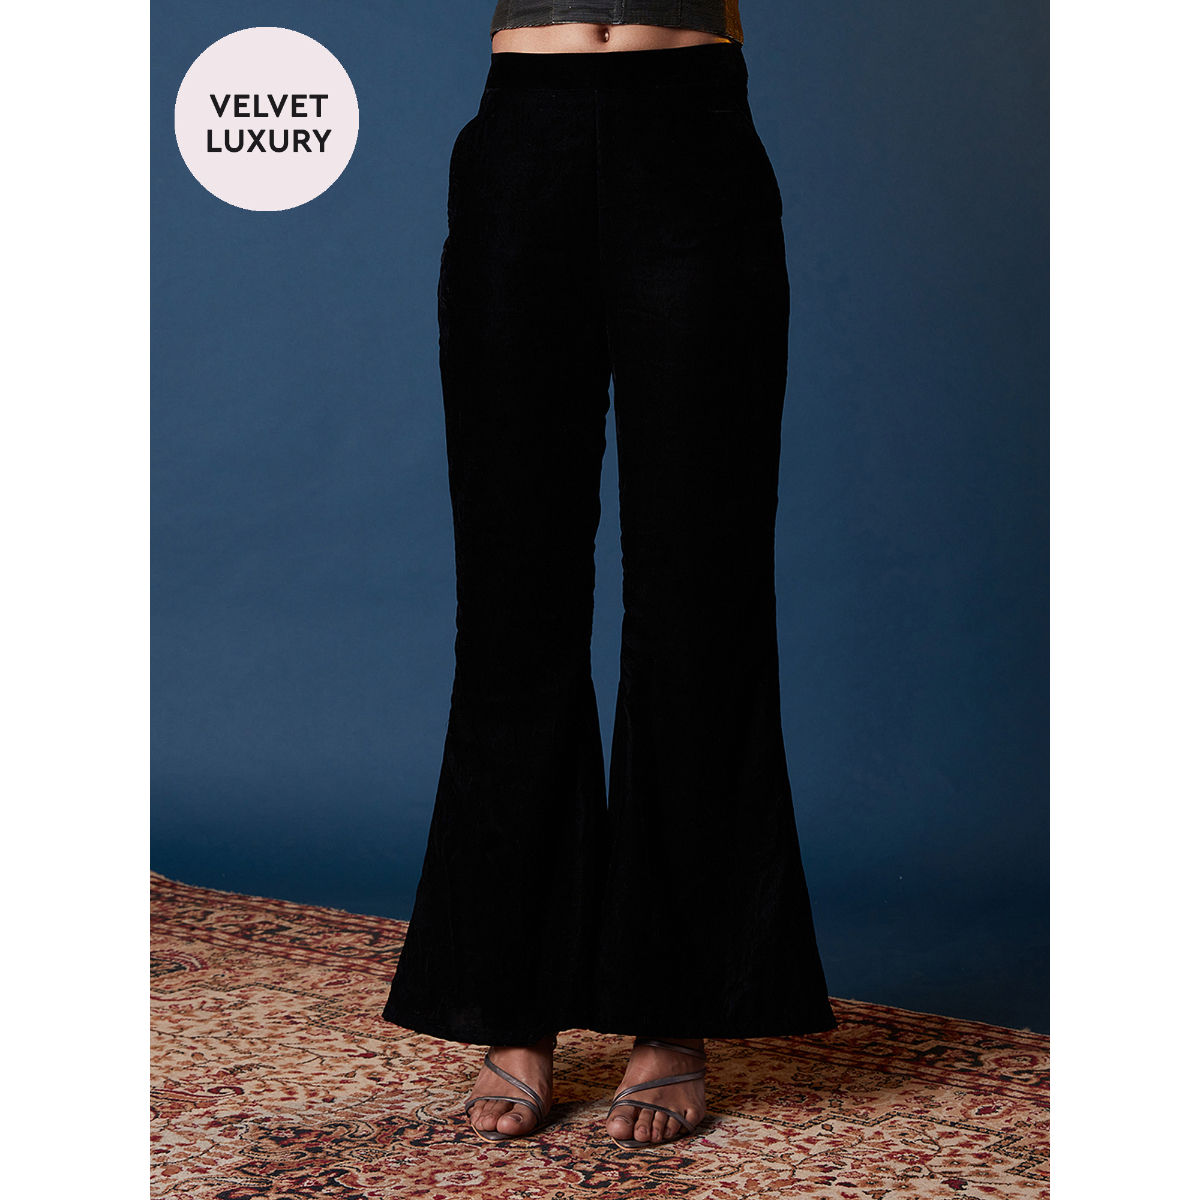 Buy Velvet Pants Online in India at Reasonable Cost on Myntra